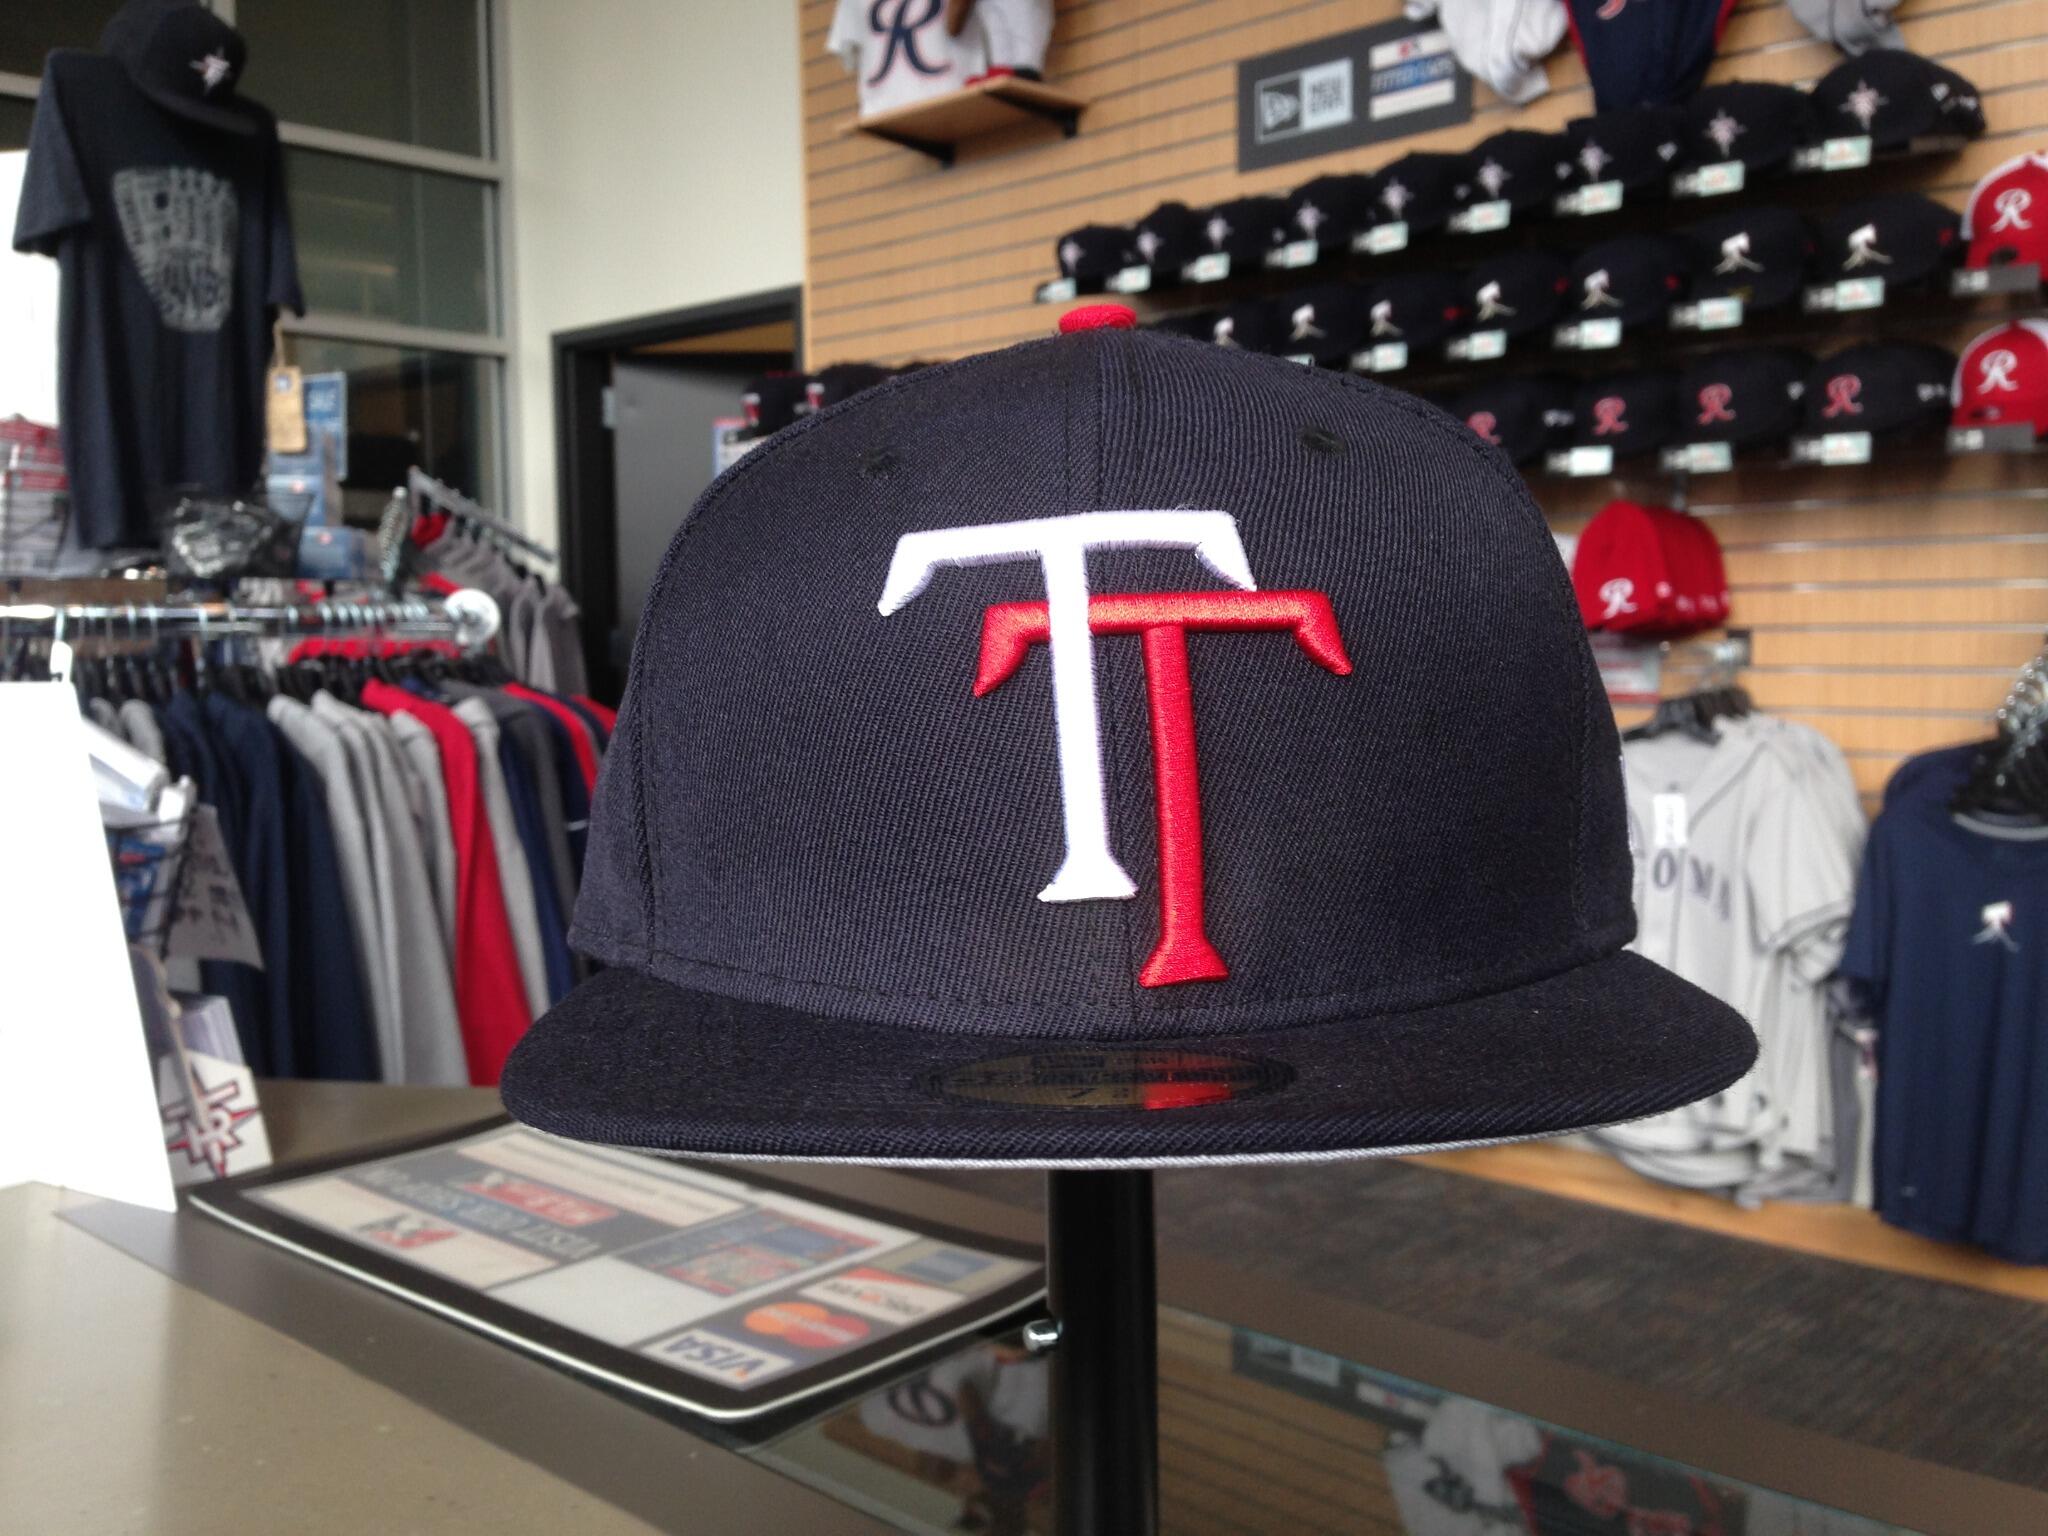 Tacoma Rainiers on X: We have Tacoma Twins throwback hats. Team